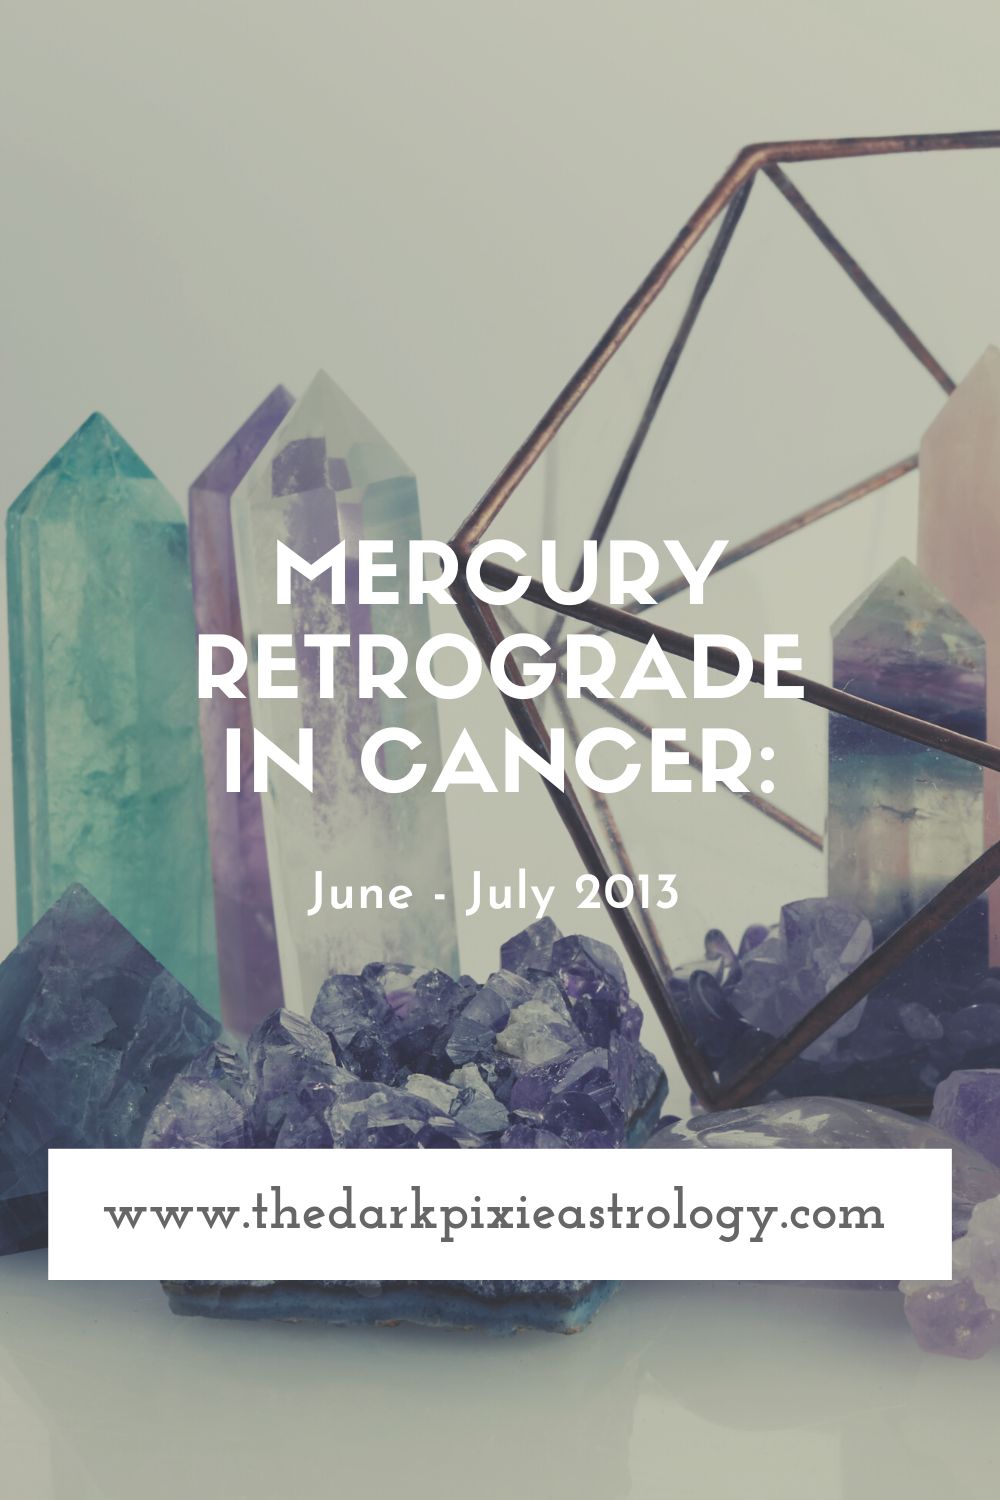 Mercury Retrograde in Cancer: June - July 2013 - The Dark Pixie Astrology